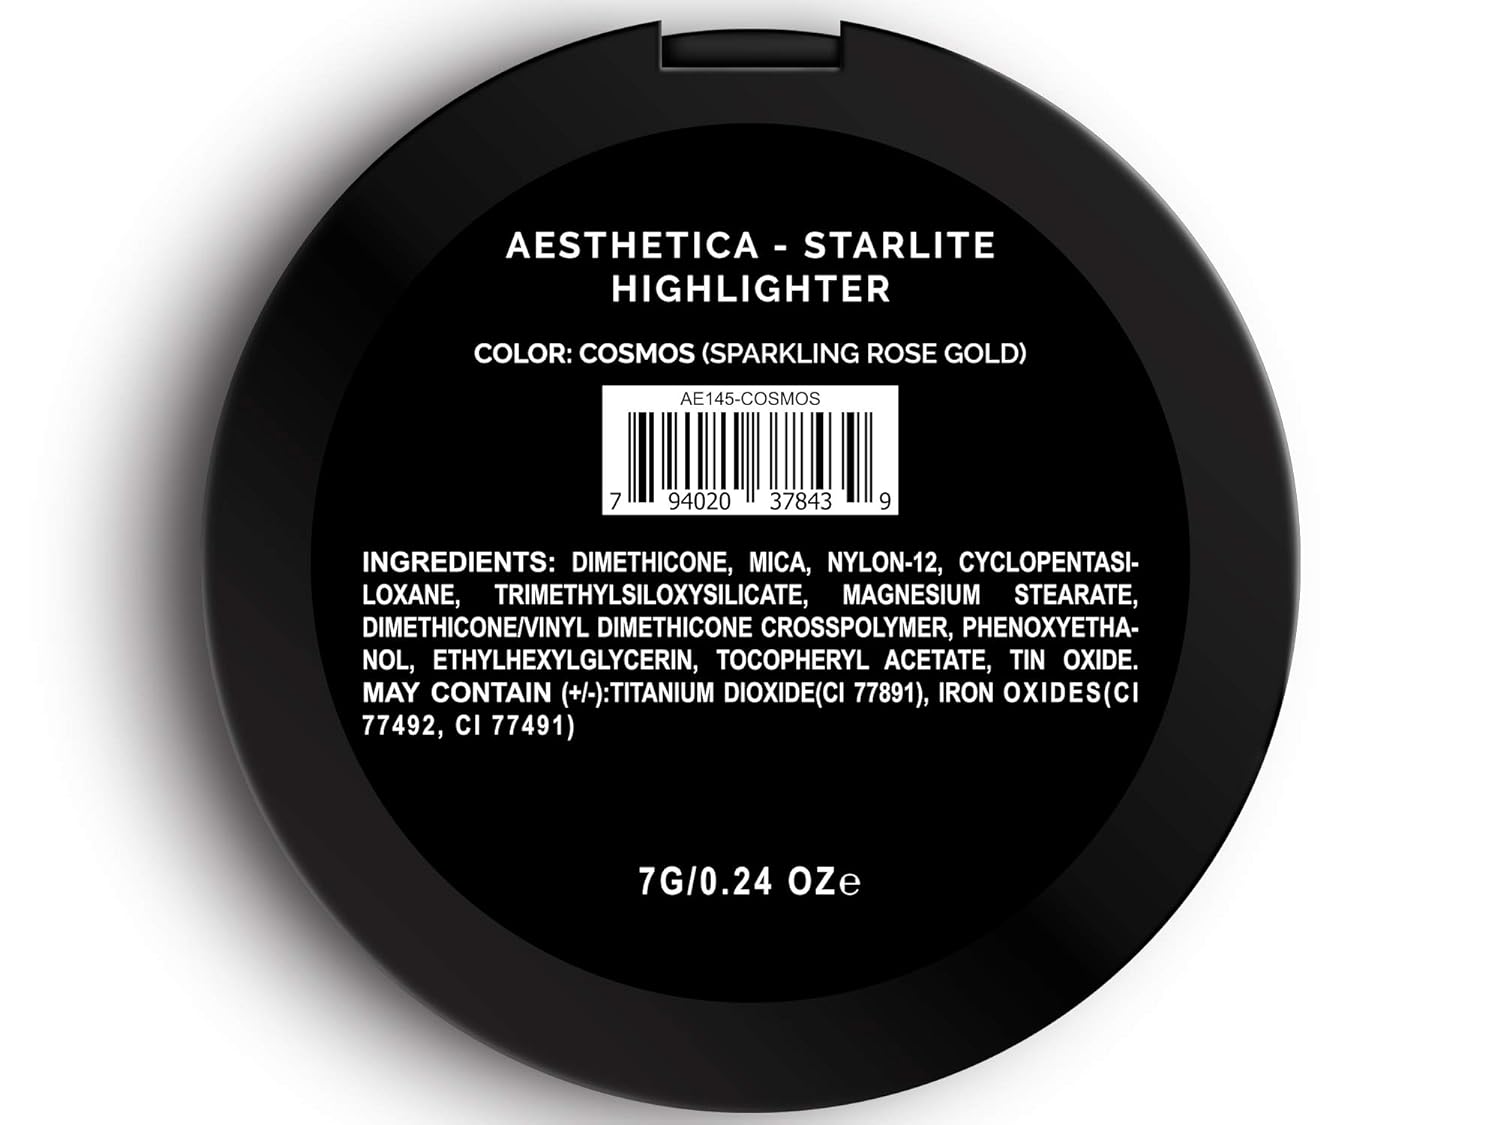  Aesthetica Starlite Highlighter - Metallic Shimmer Highlighting Makeup Powder - Venus (Pearlescent White)